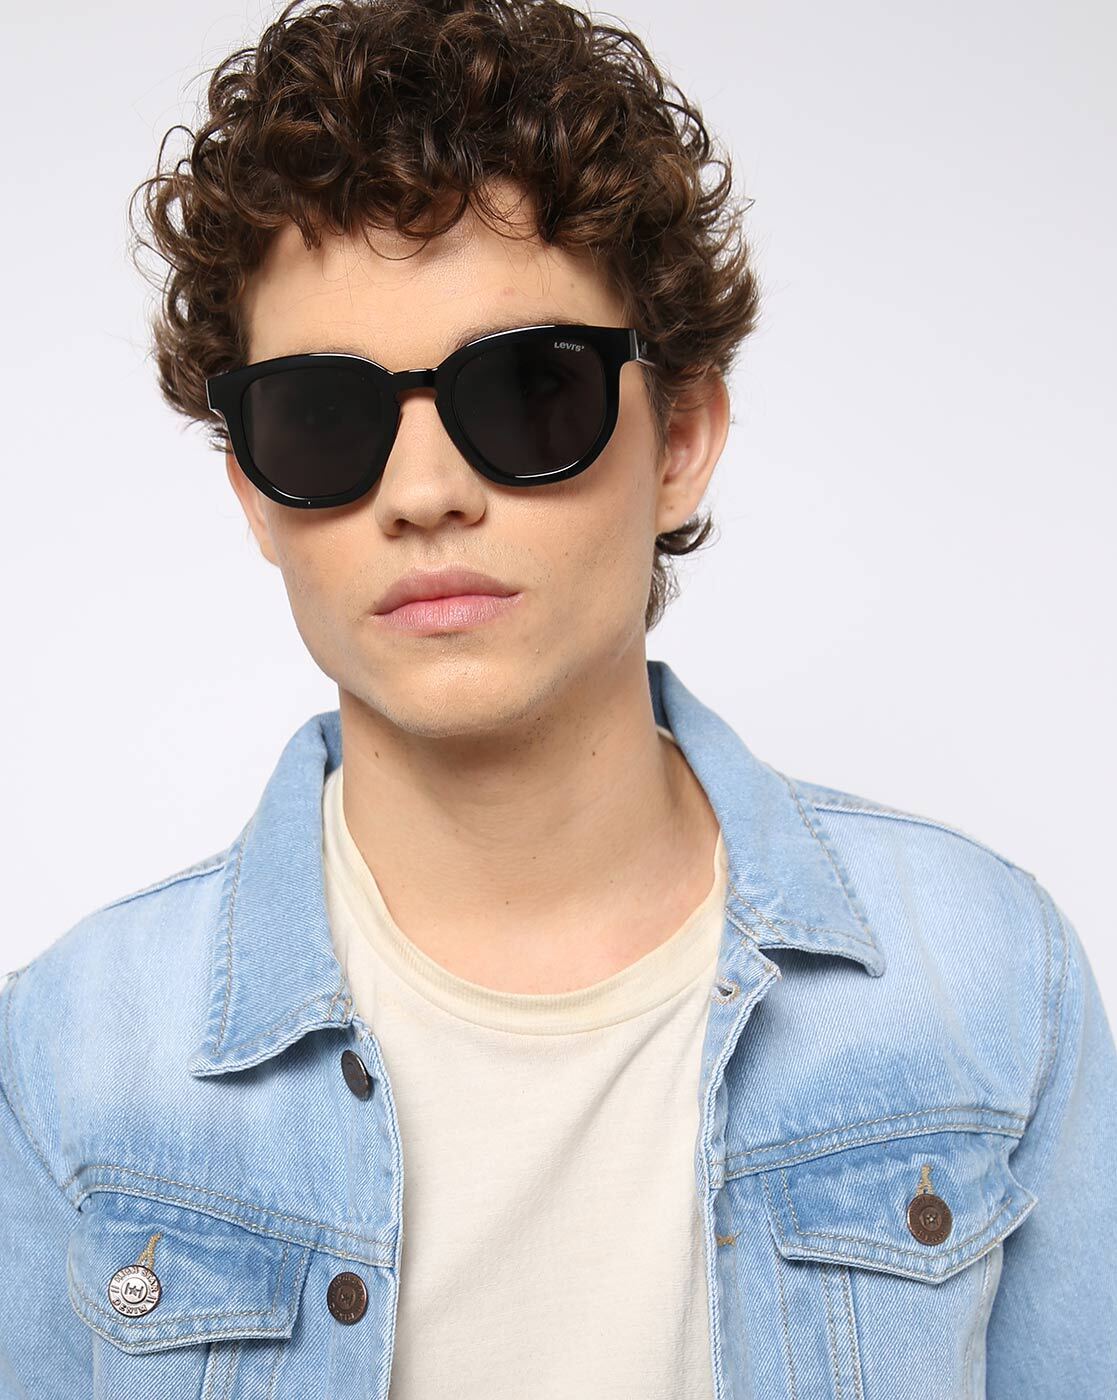 Levi's Sunglasses : Buy Levi's Round-Oval Sunglasses For Men Metal